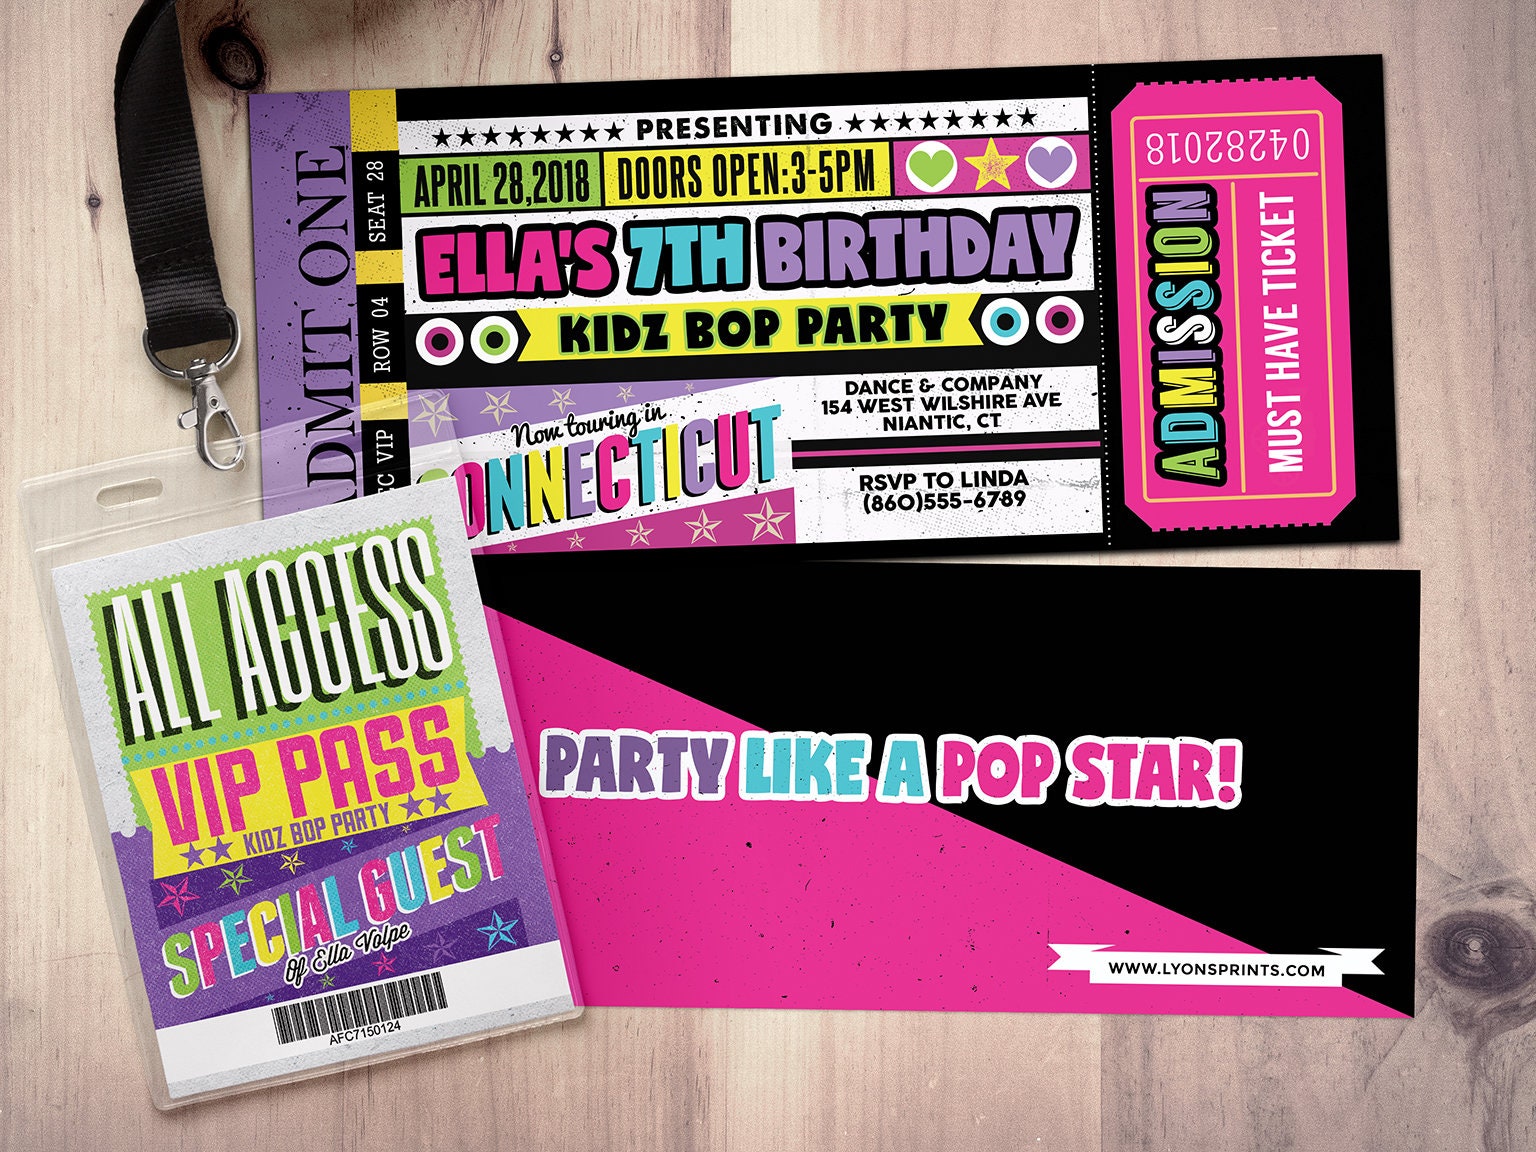 Pop Star, Rock Star Concert Ticket Birthday Party Invitation - Music Invitation, Rockstar Party, Pop Karaoke Glow